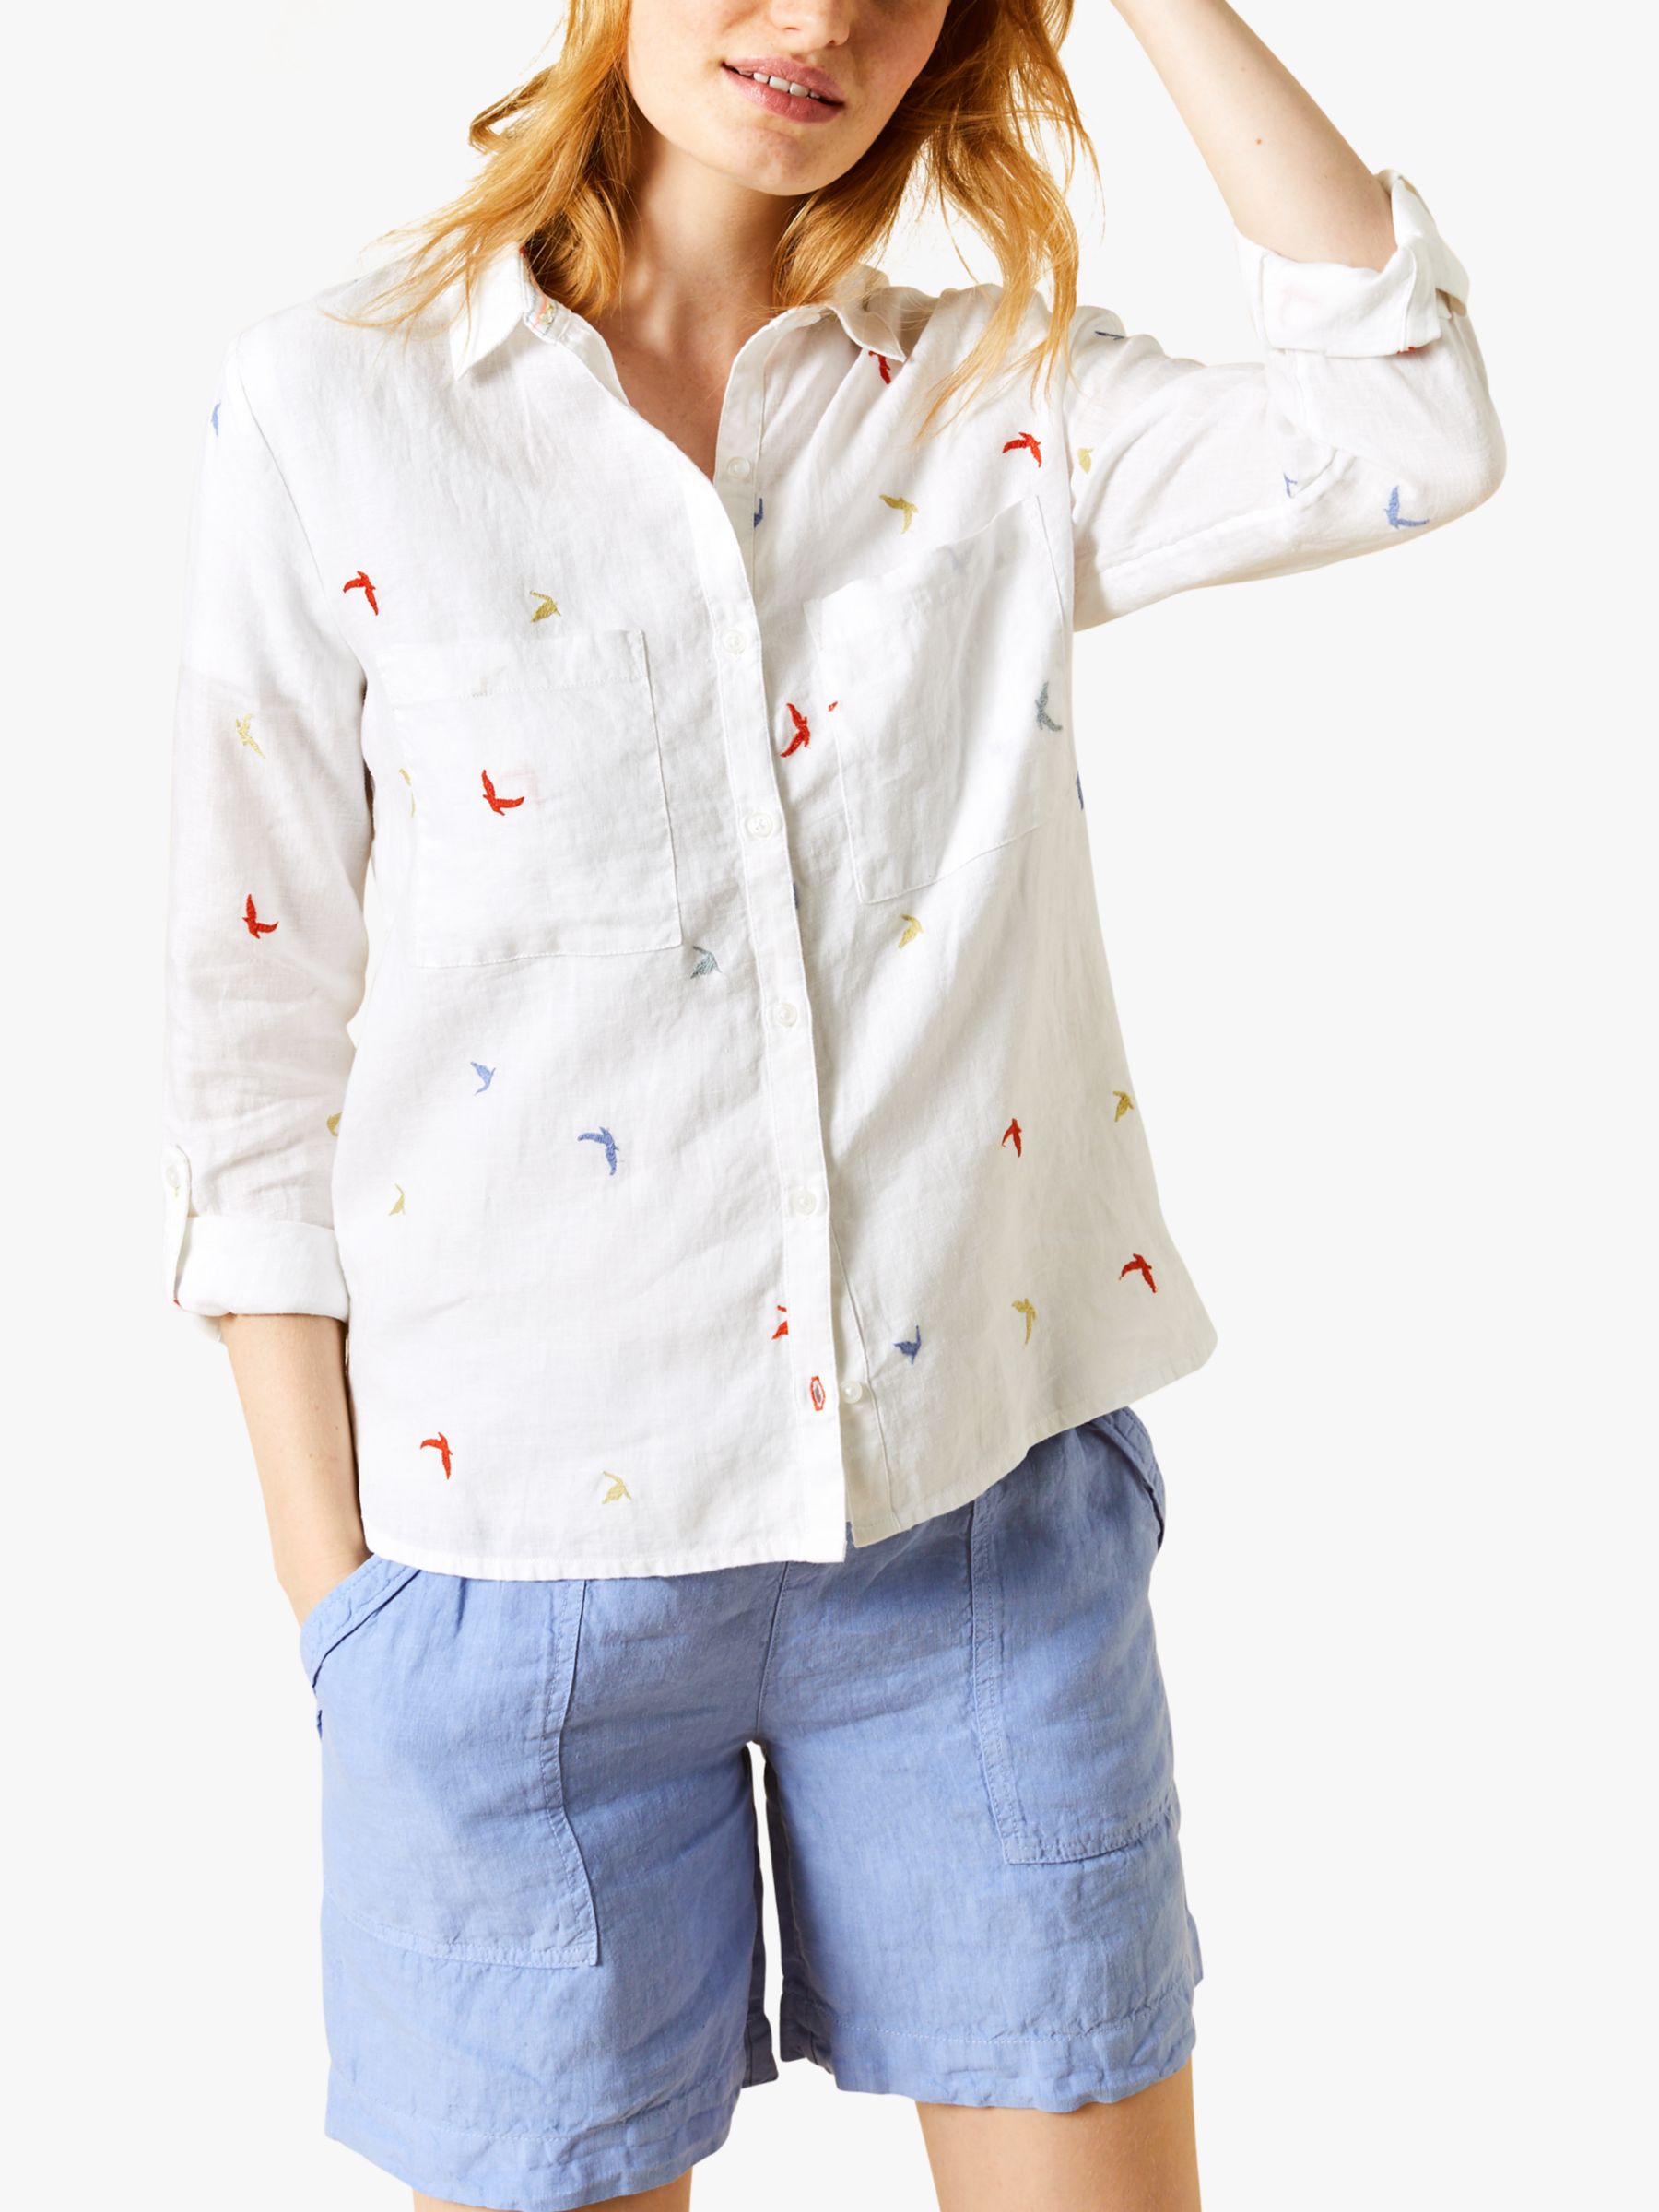 nuez aprobar Decepcionado White Stuff Fly Away Embroidered Linen Shirt, White